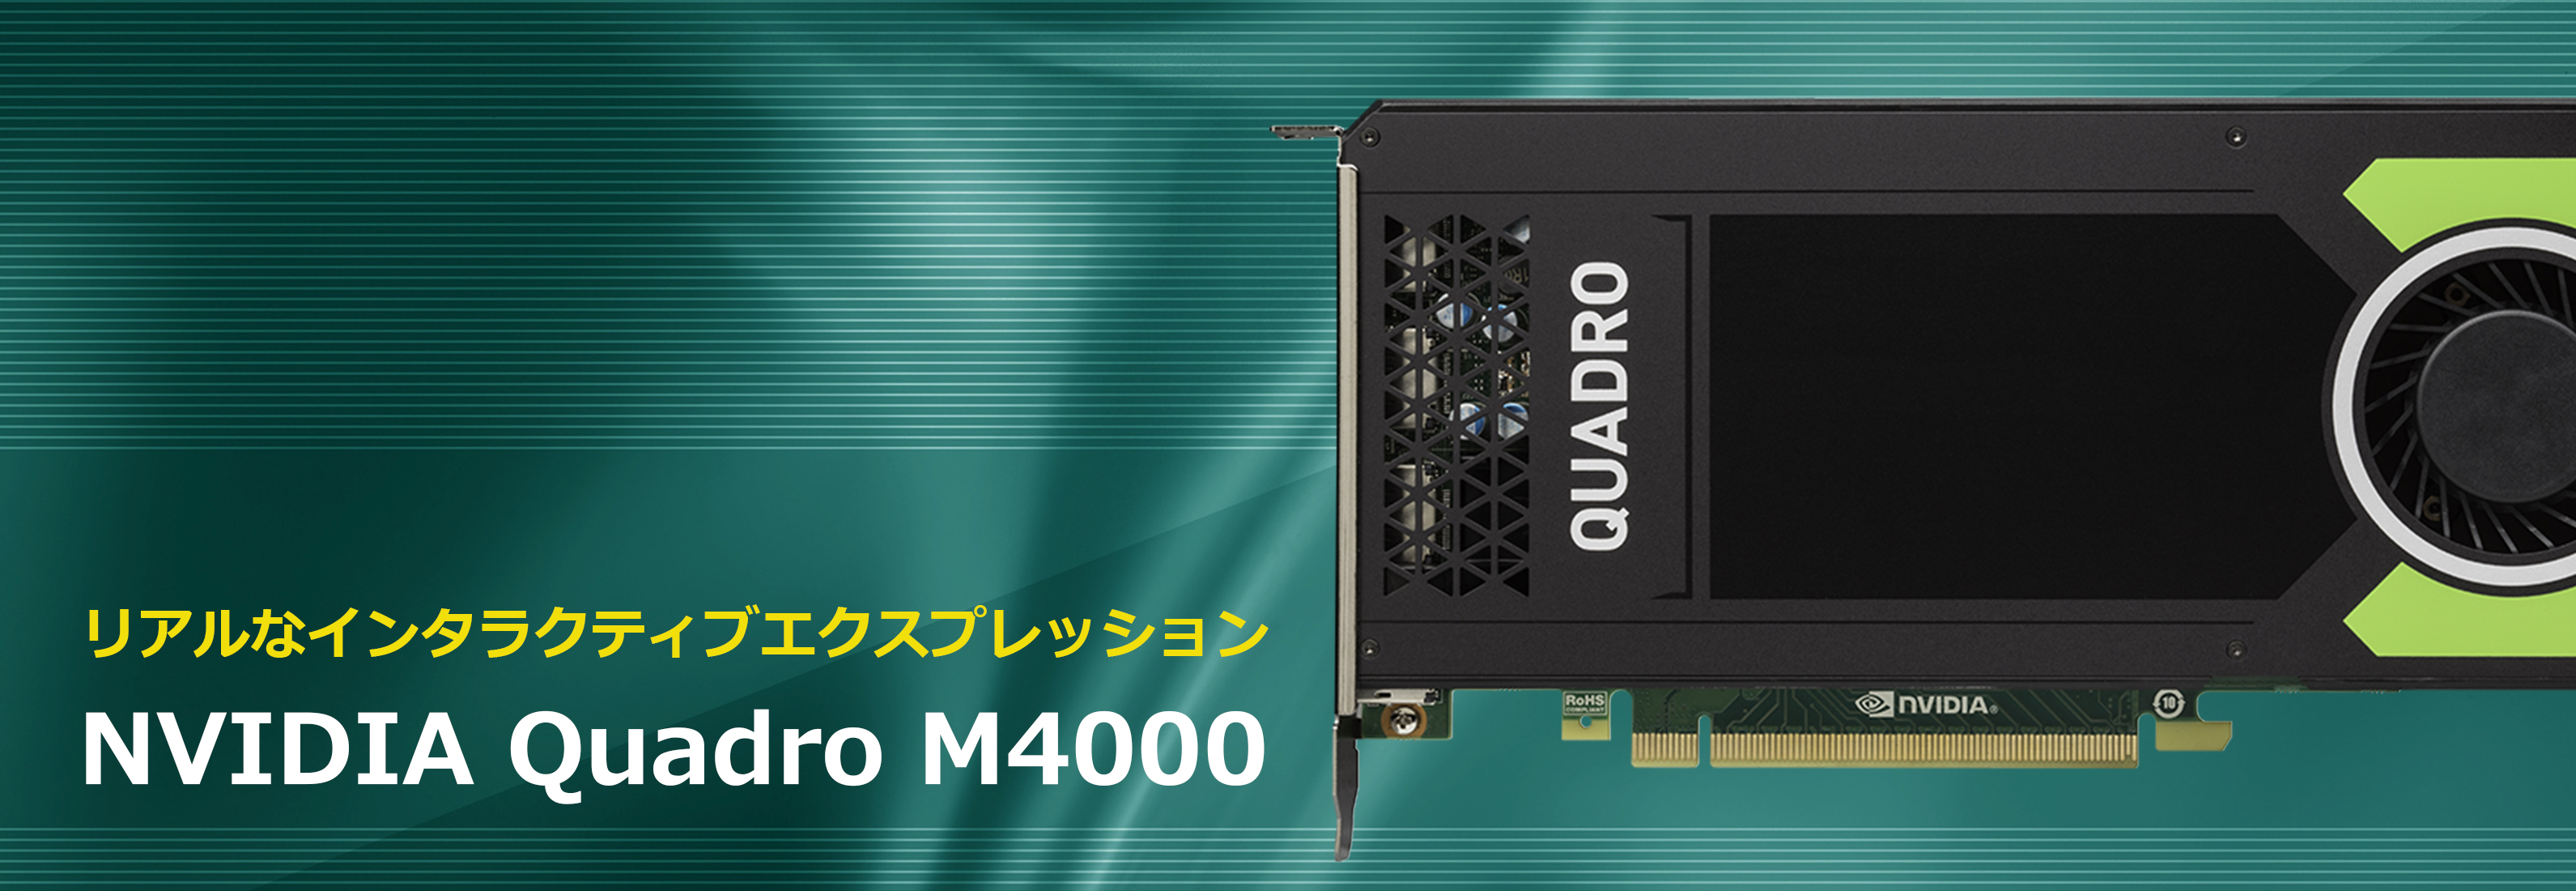 PC/タブレット PCパーツ NVIDIA Quadro M4000 | 菱洋エレクトロ株式会社 - NVIDIA製品情報